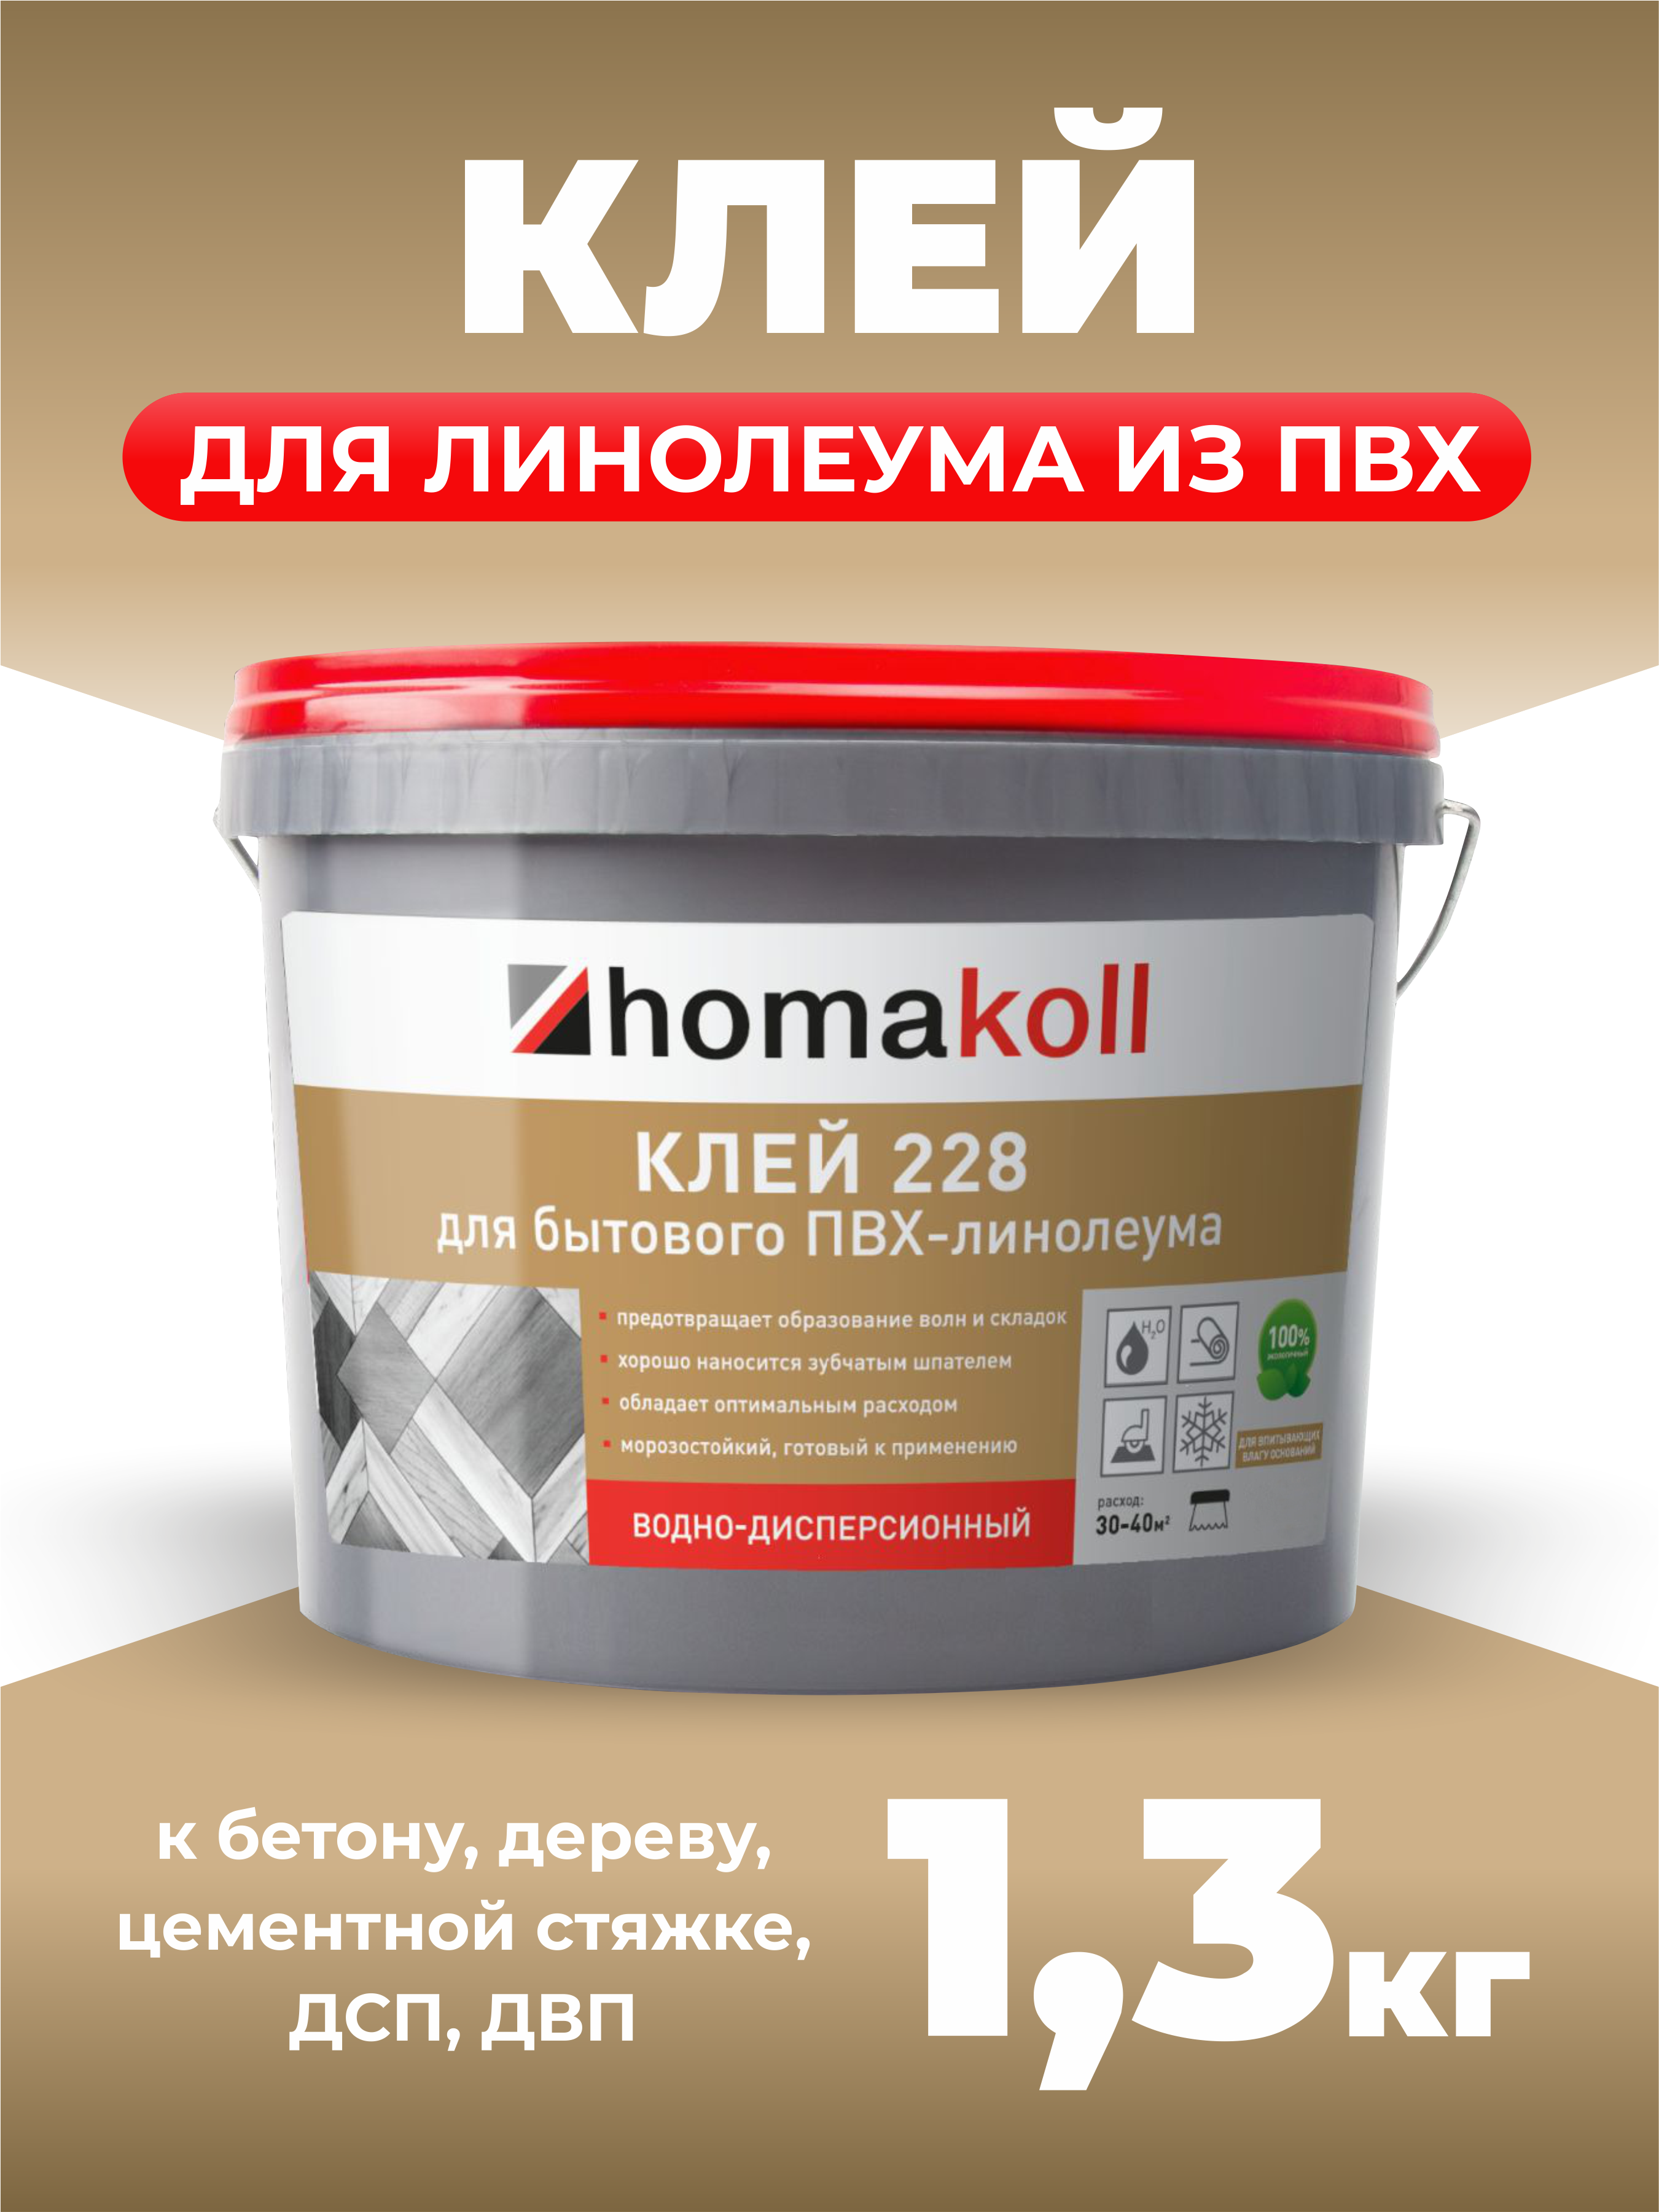 Клей homakoll 228 ведро 1,3 кг